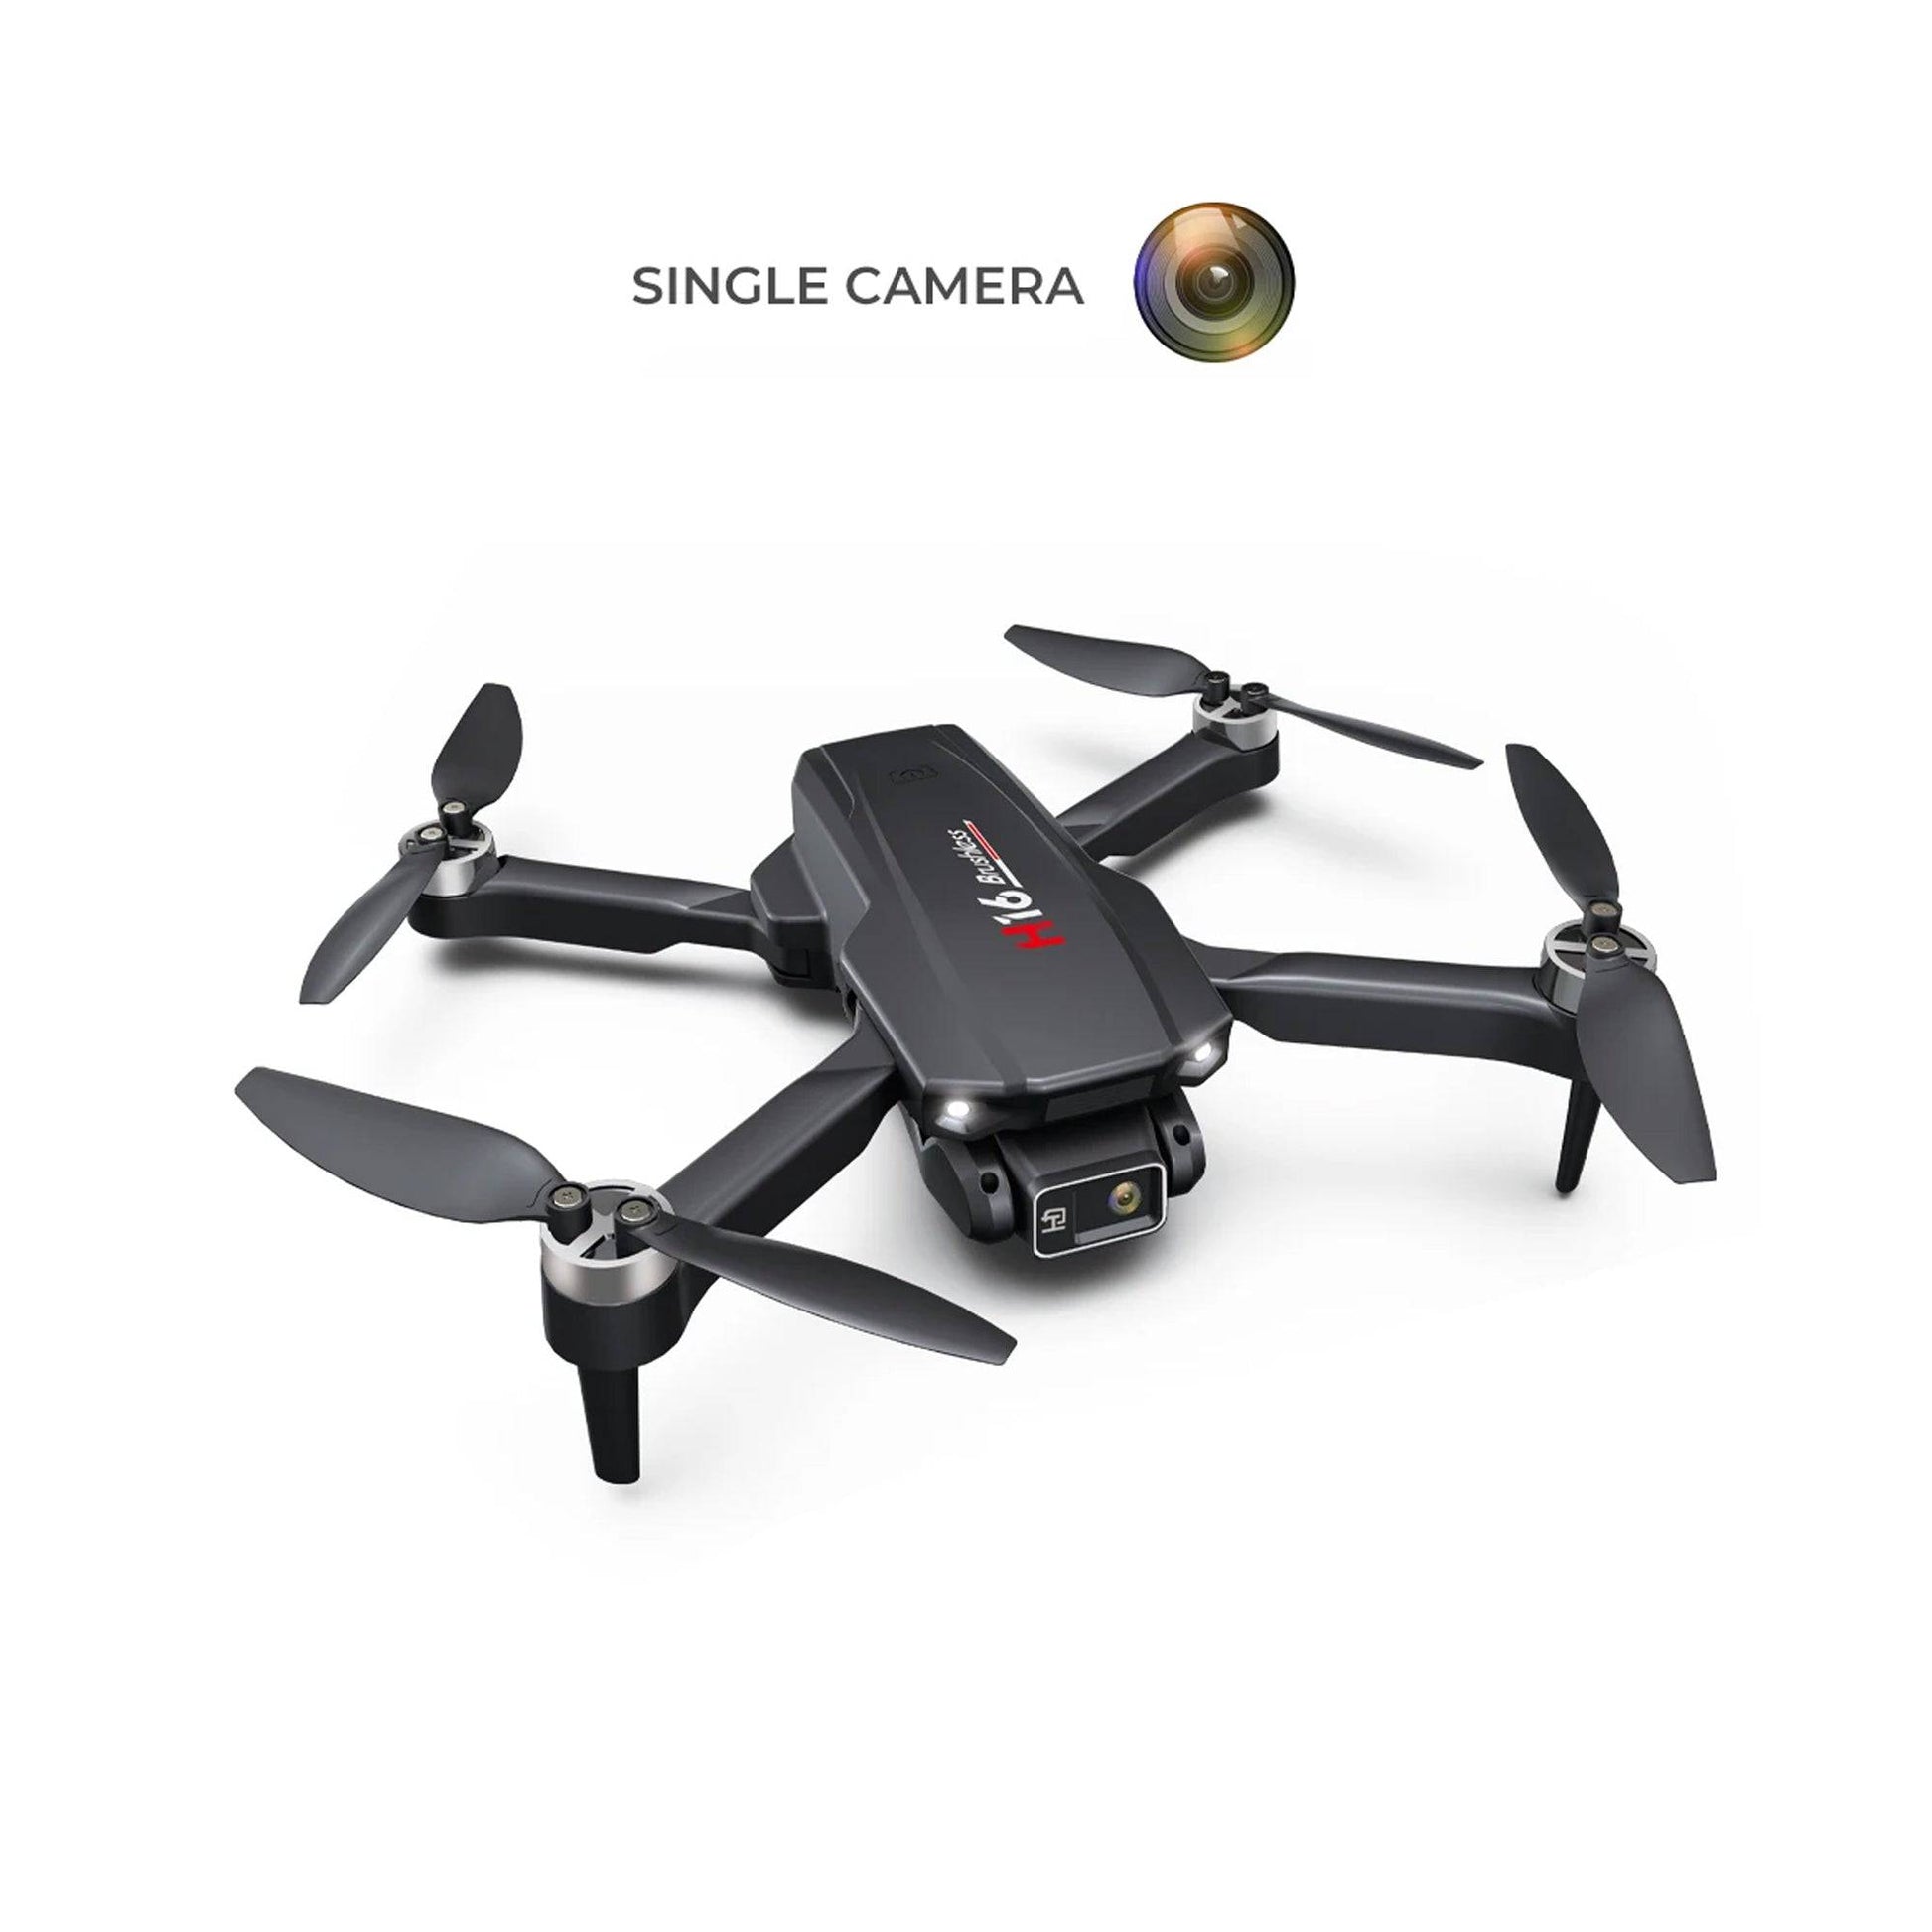 H16 Mini RC Foldable Drone With 4K Single Camera